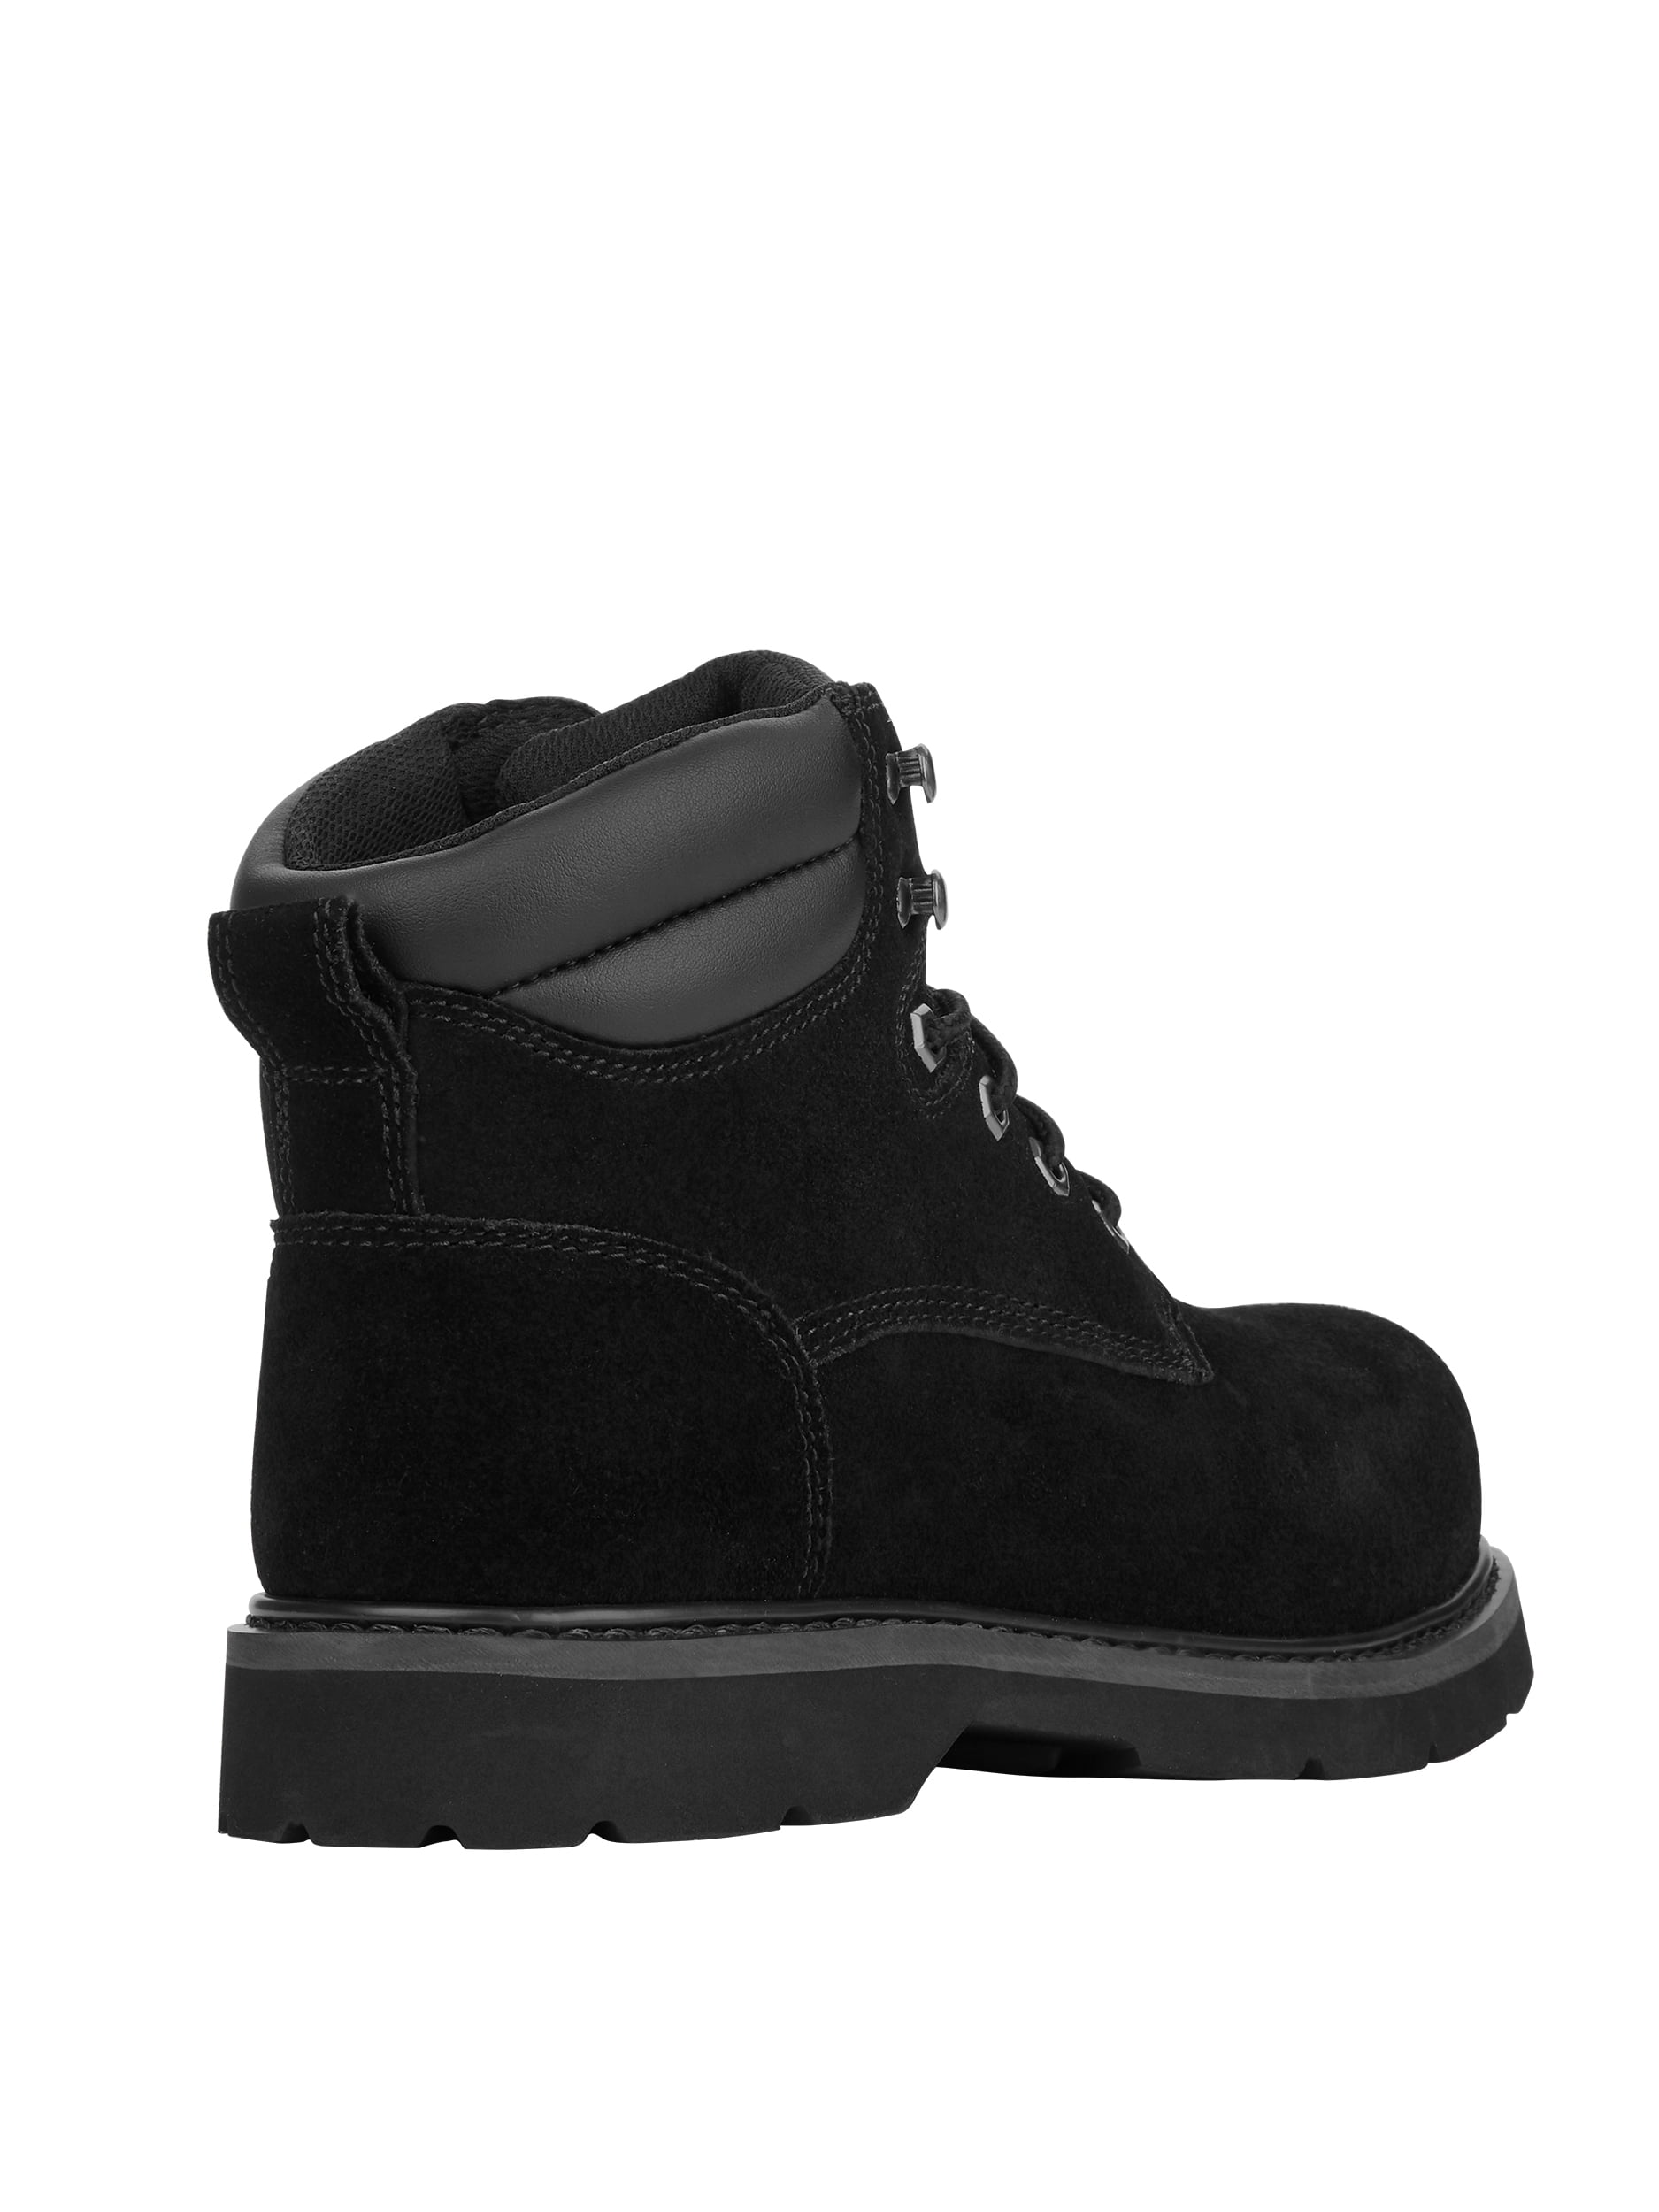 black suede work boots